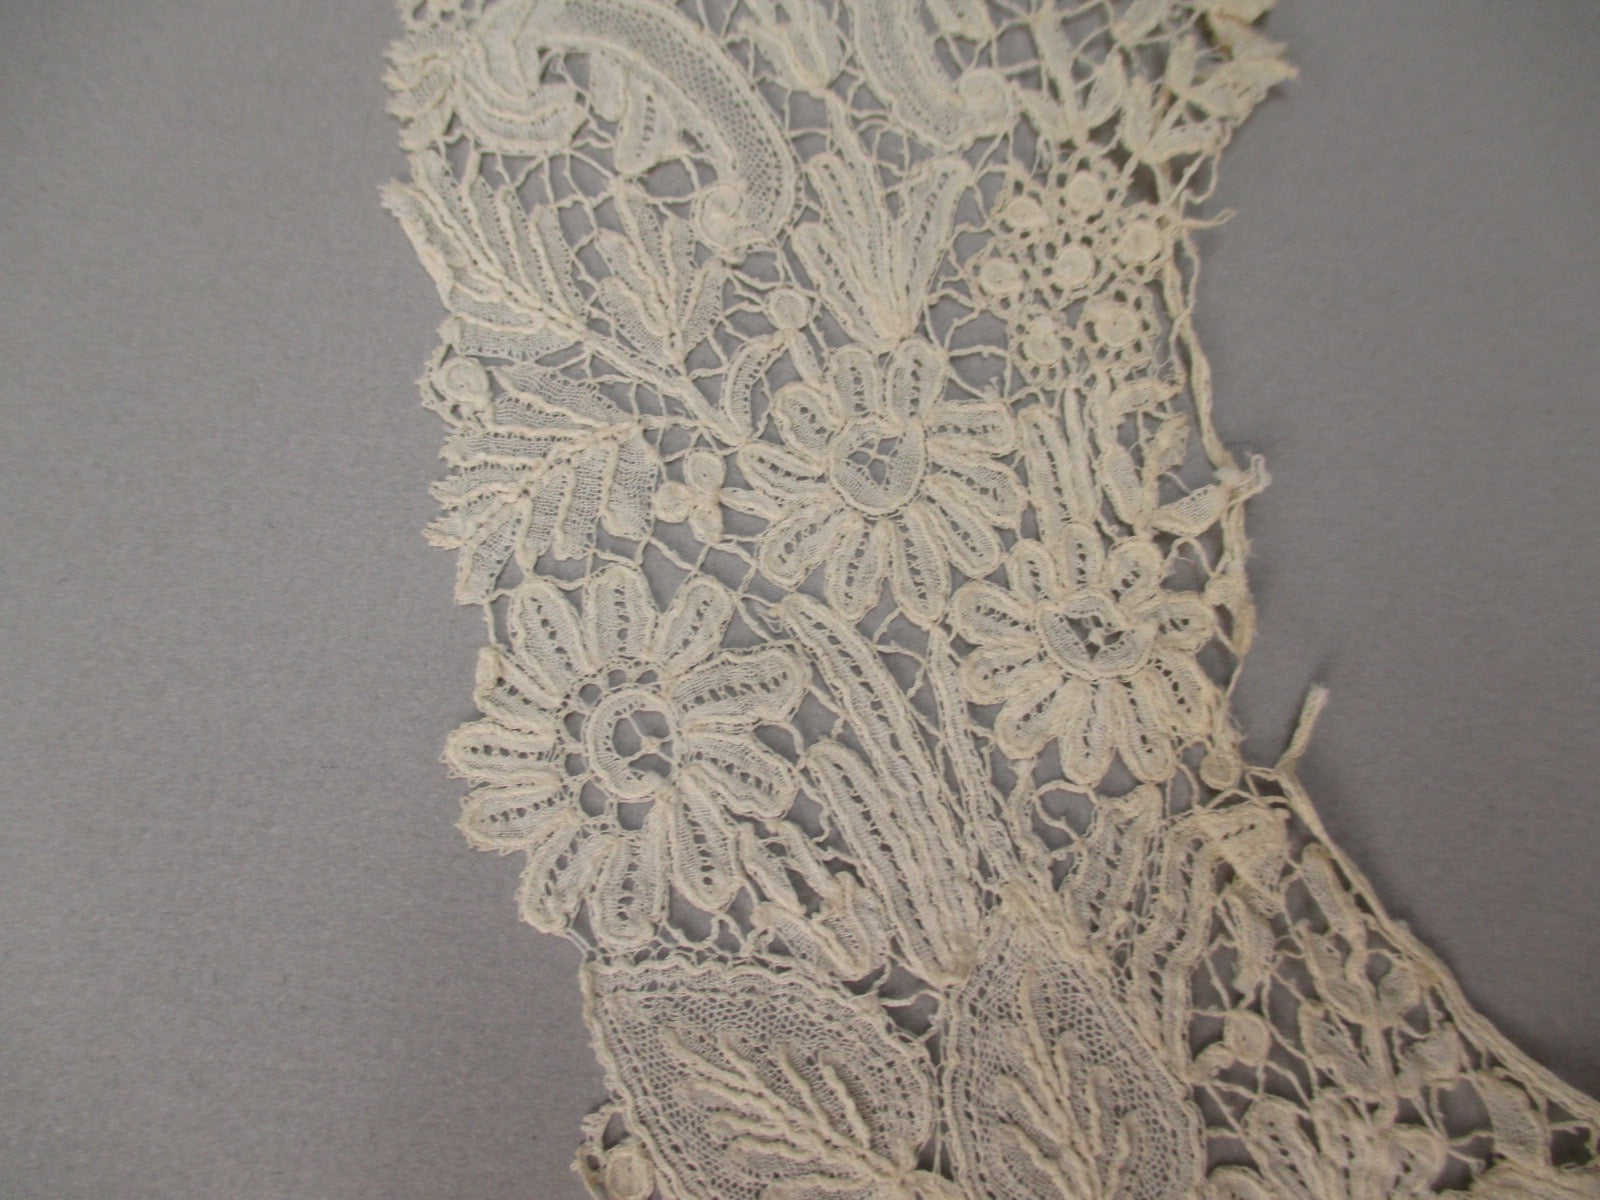 Antique Duchesse lace collar handmade Victorian